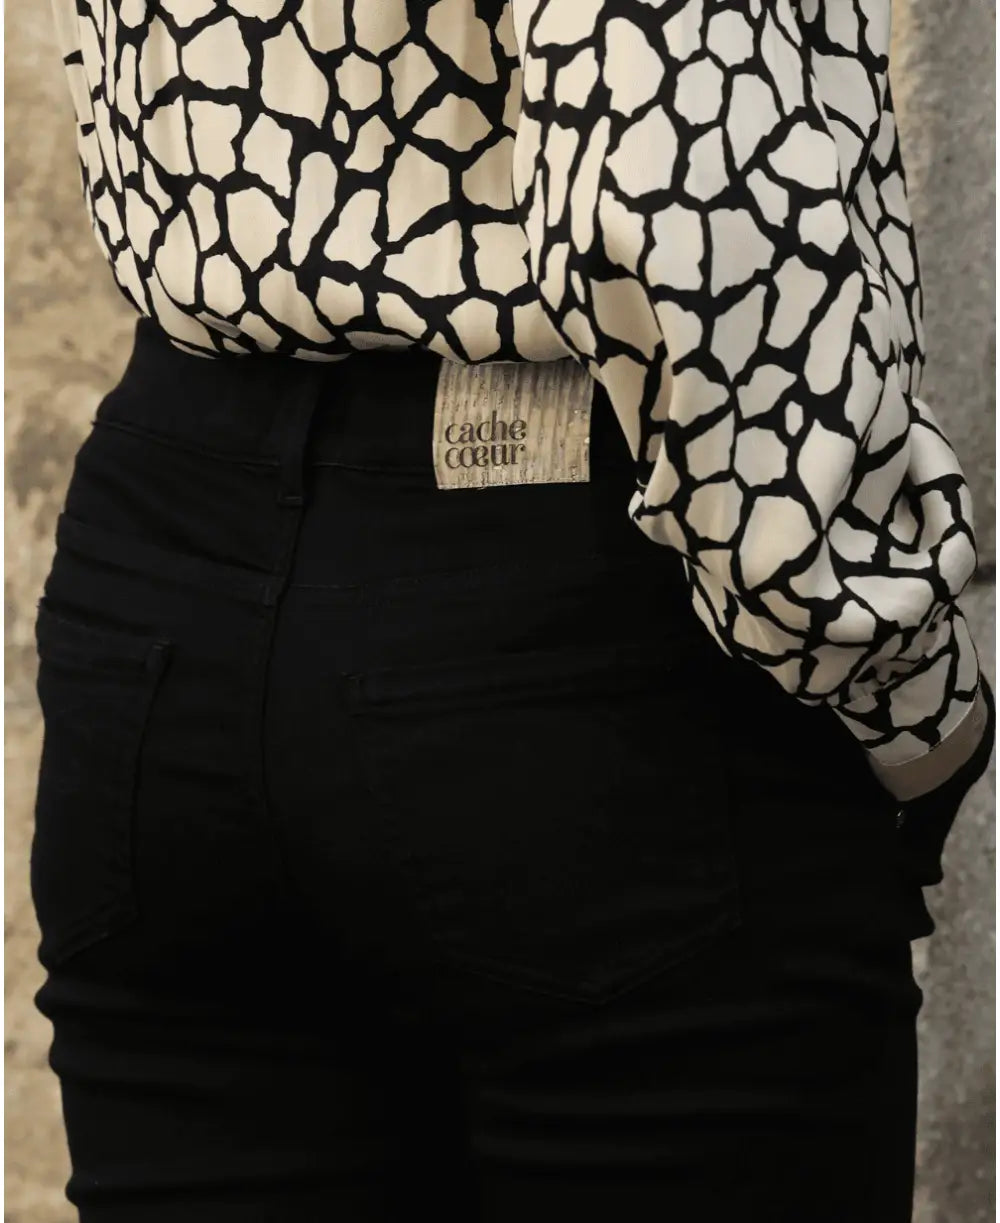 Maternity and postpartum black denim Sharon - Jeans